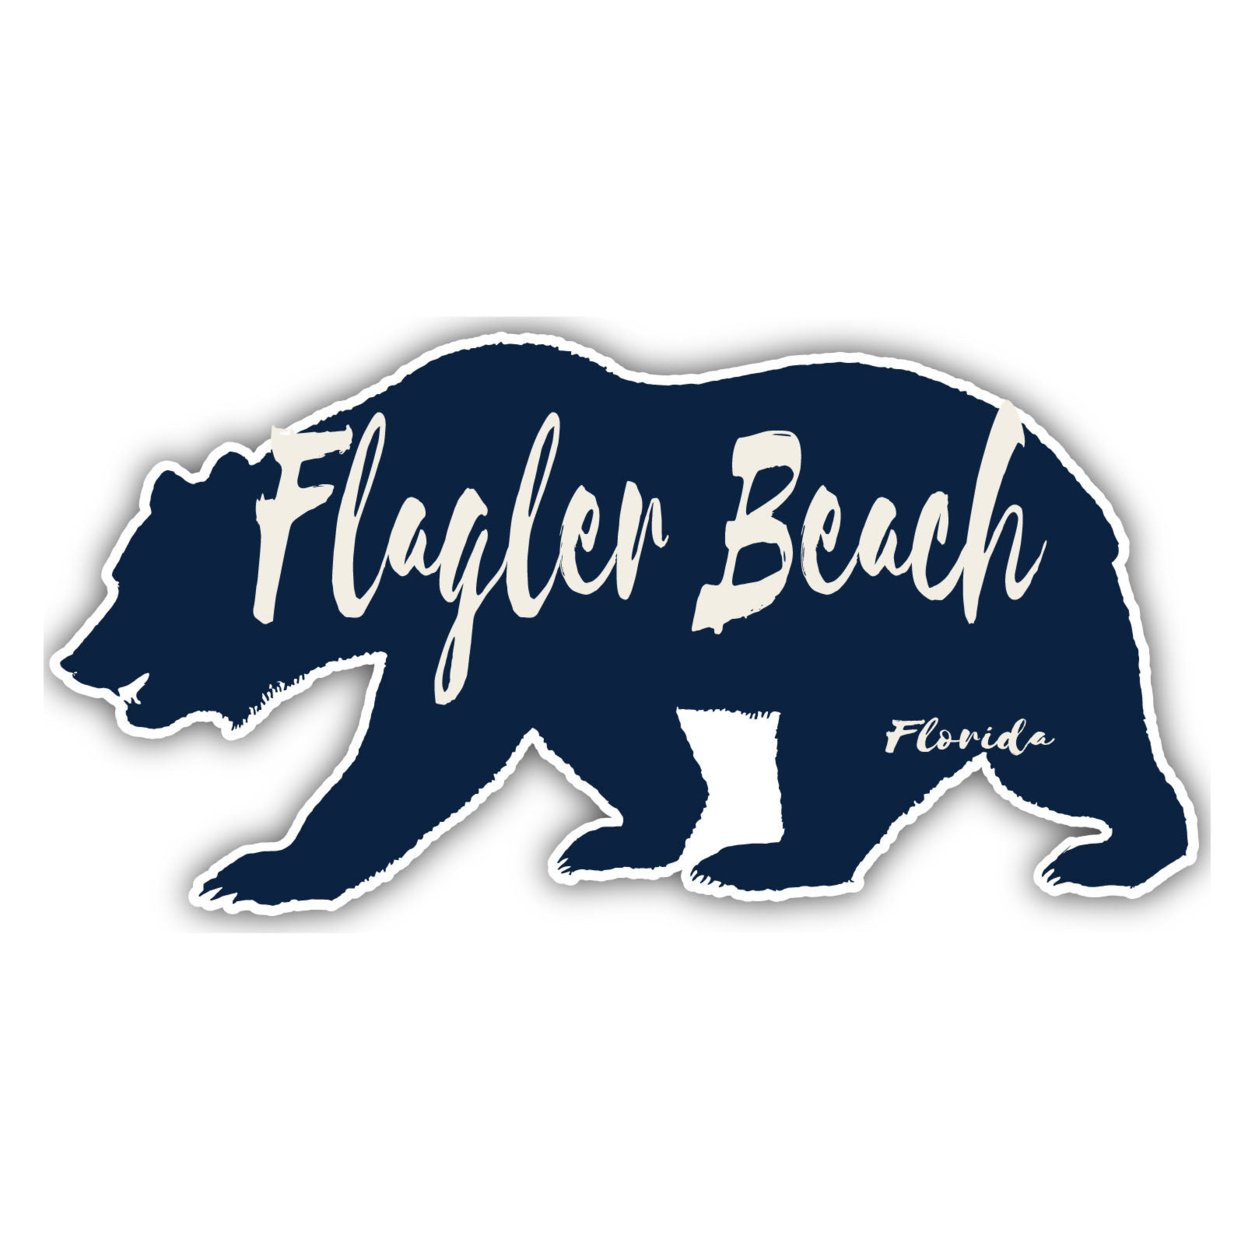 Flagler Beach Florida Souvenir Decorative Stickers (Choose Theme And Size) - Single Unit, 2-Inch, Bear